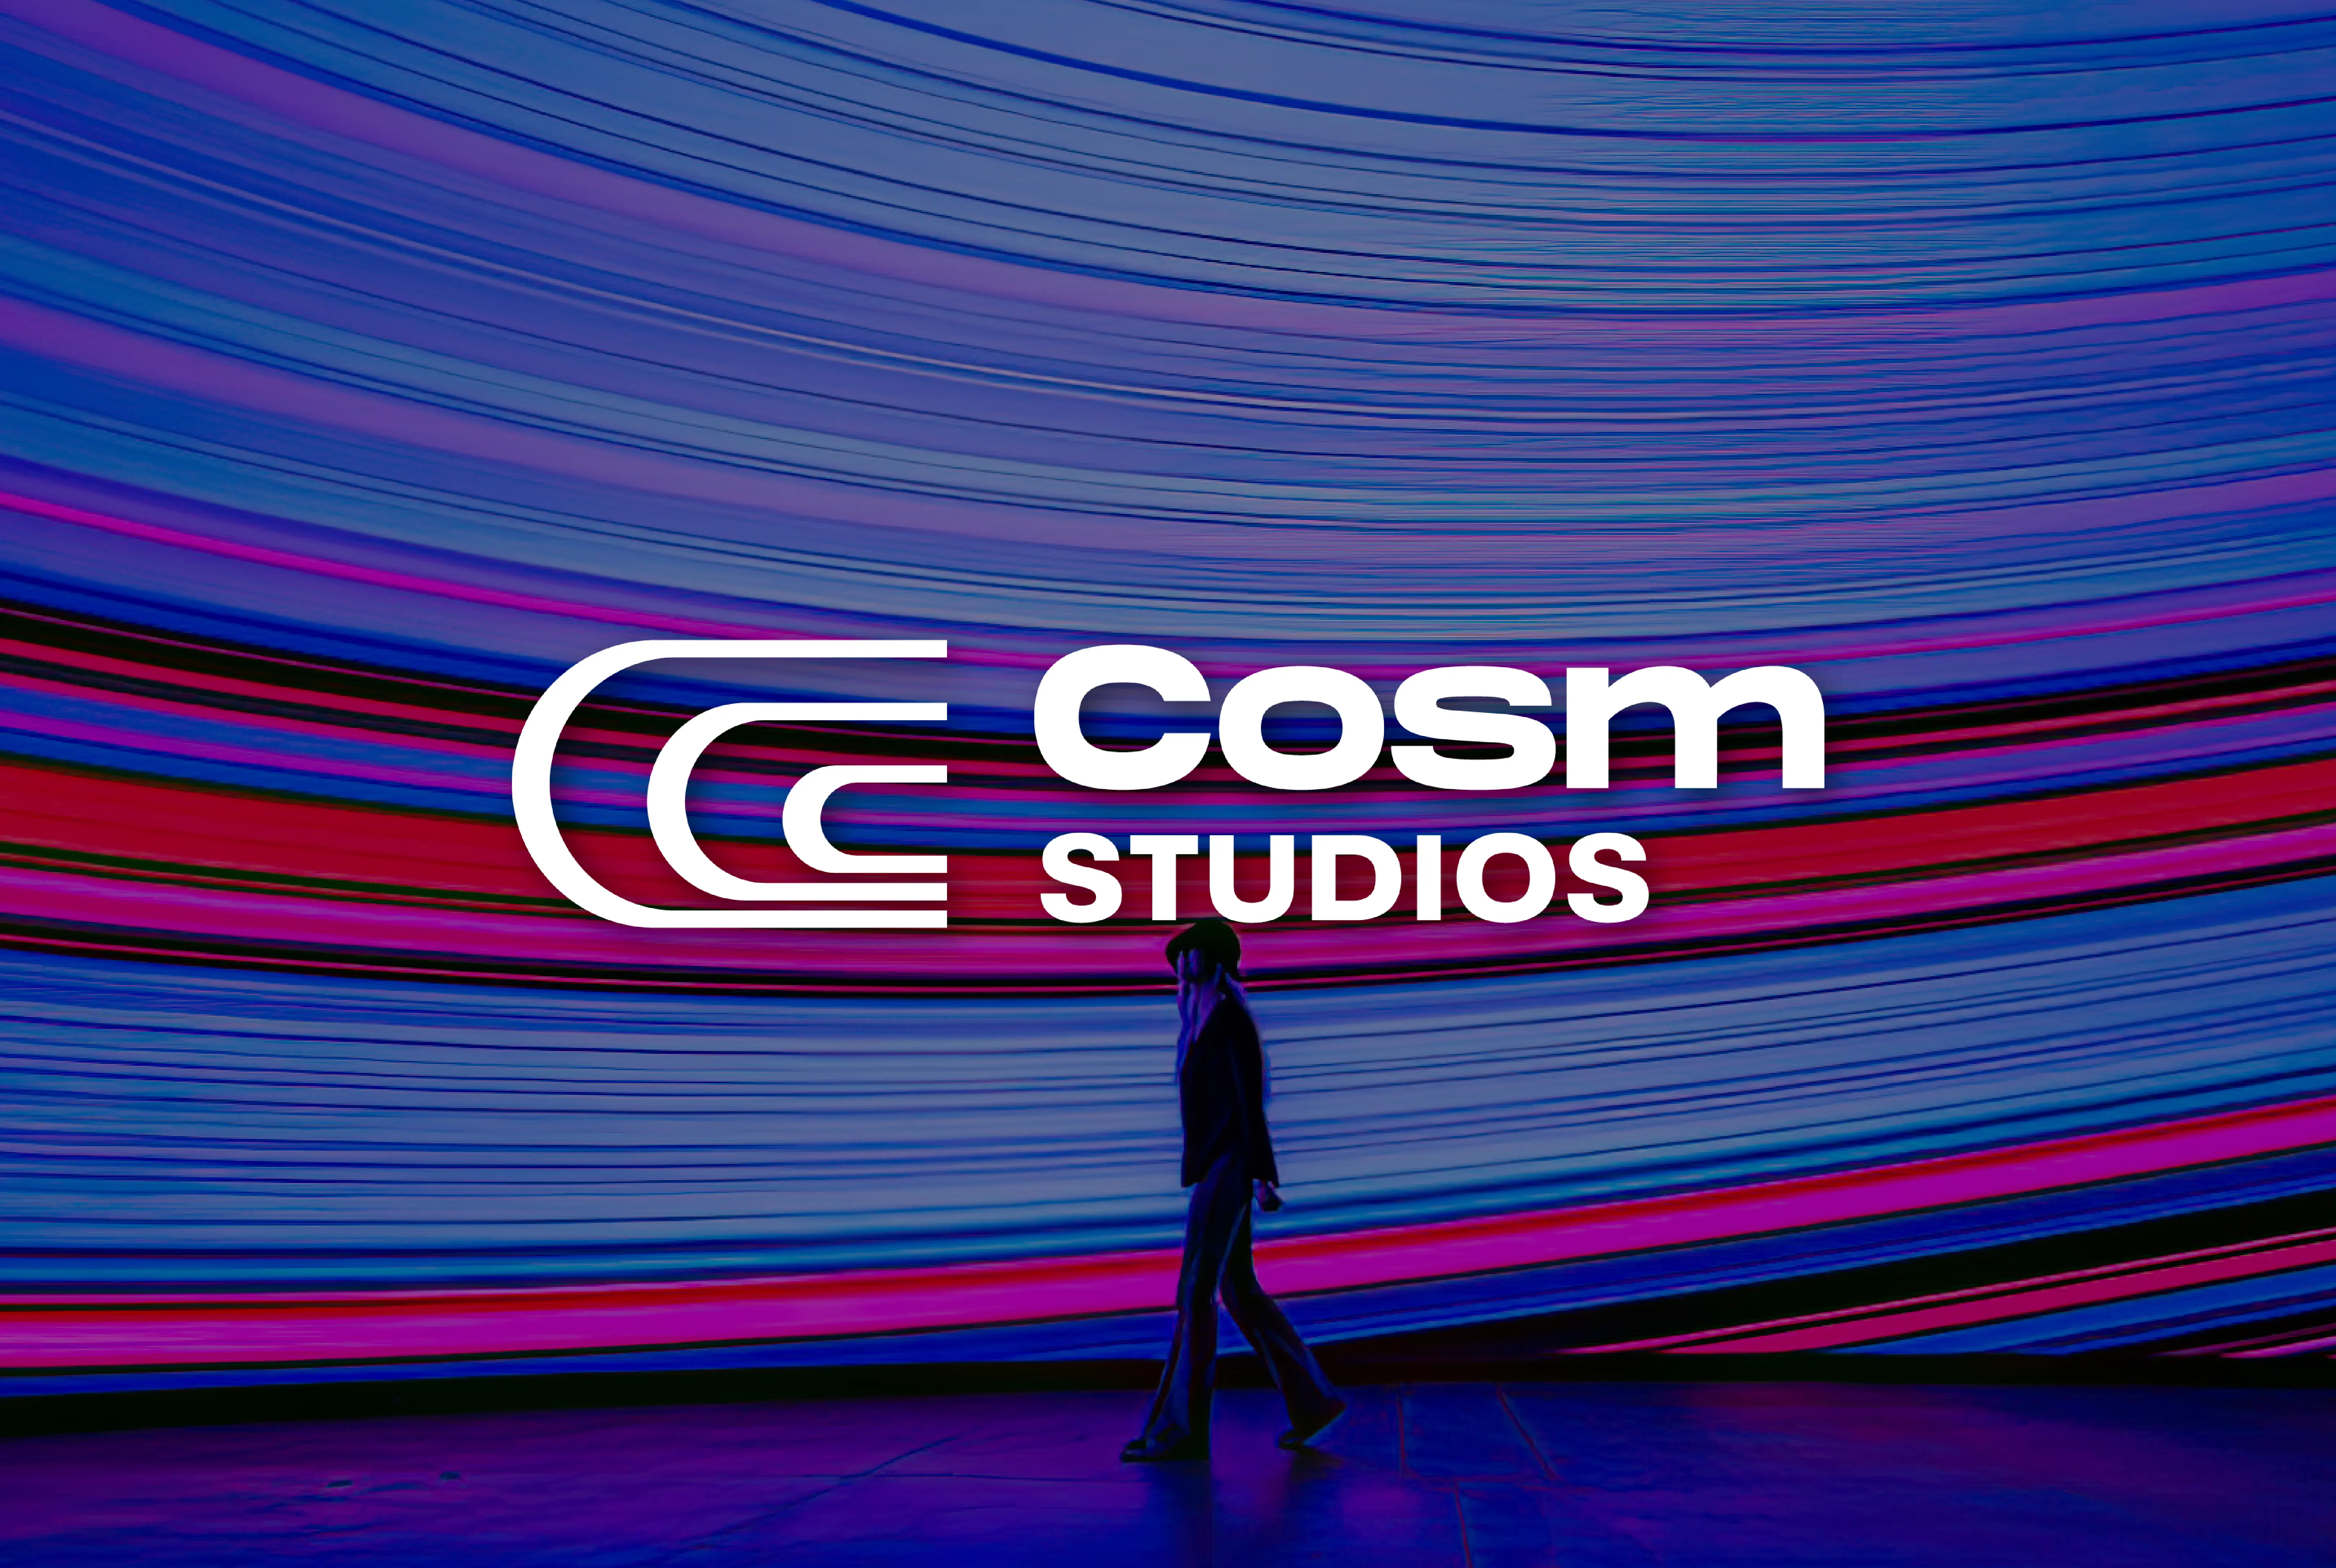 Cosm Studios